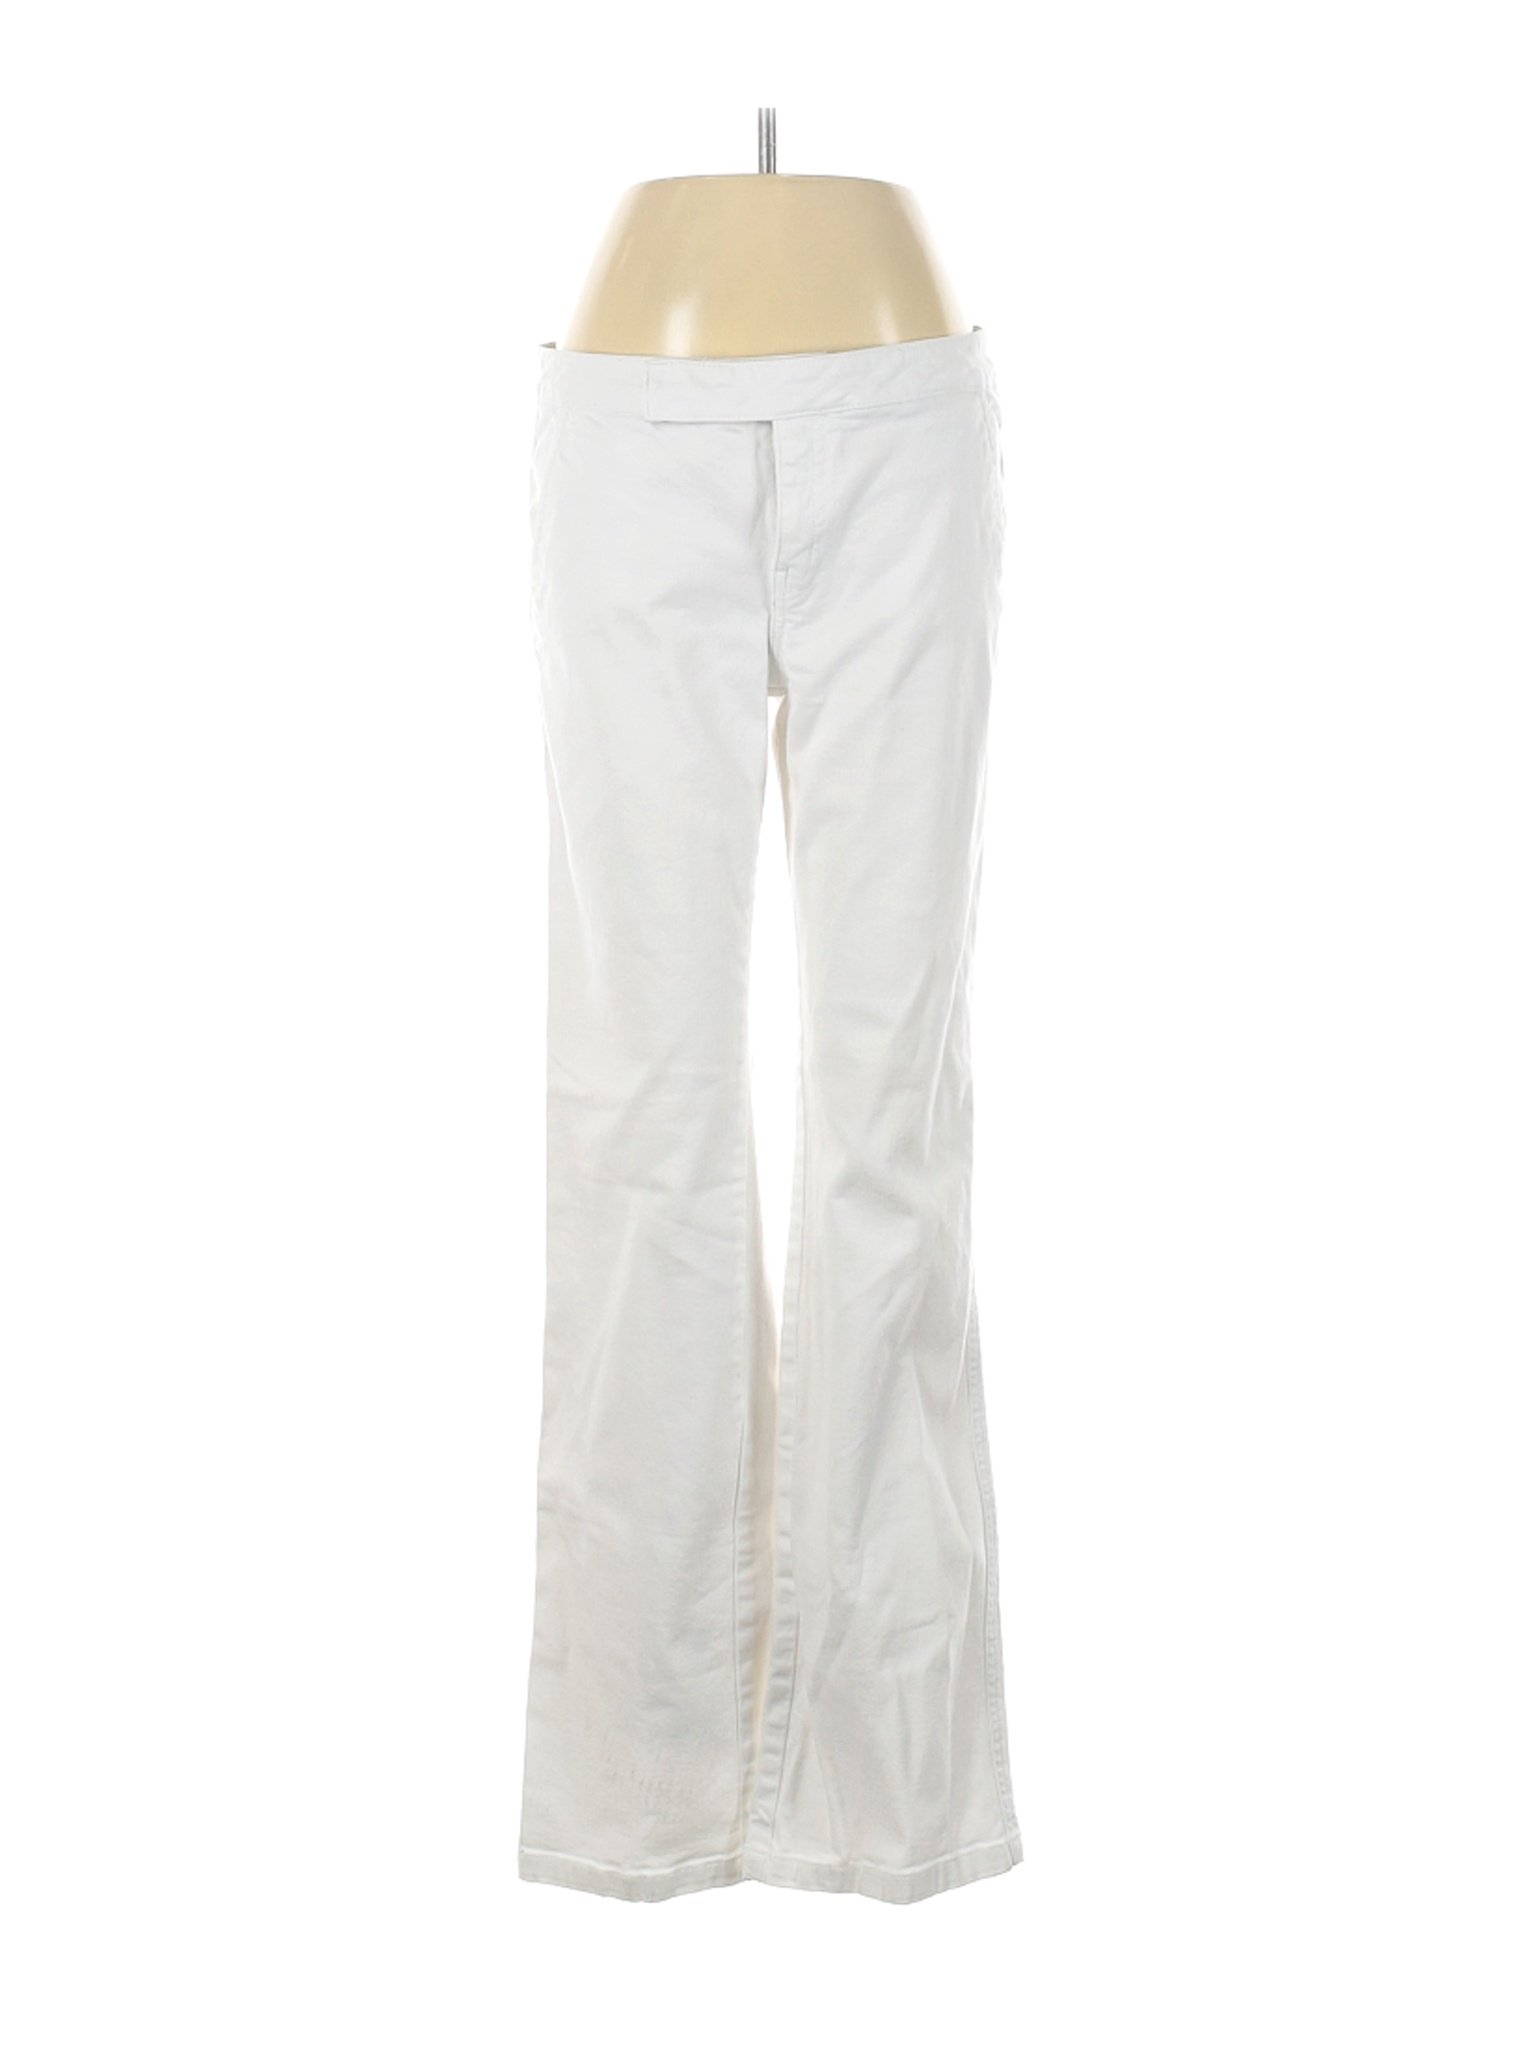 Kristin Davis Women White Jeans 6 | eBay